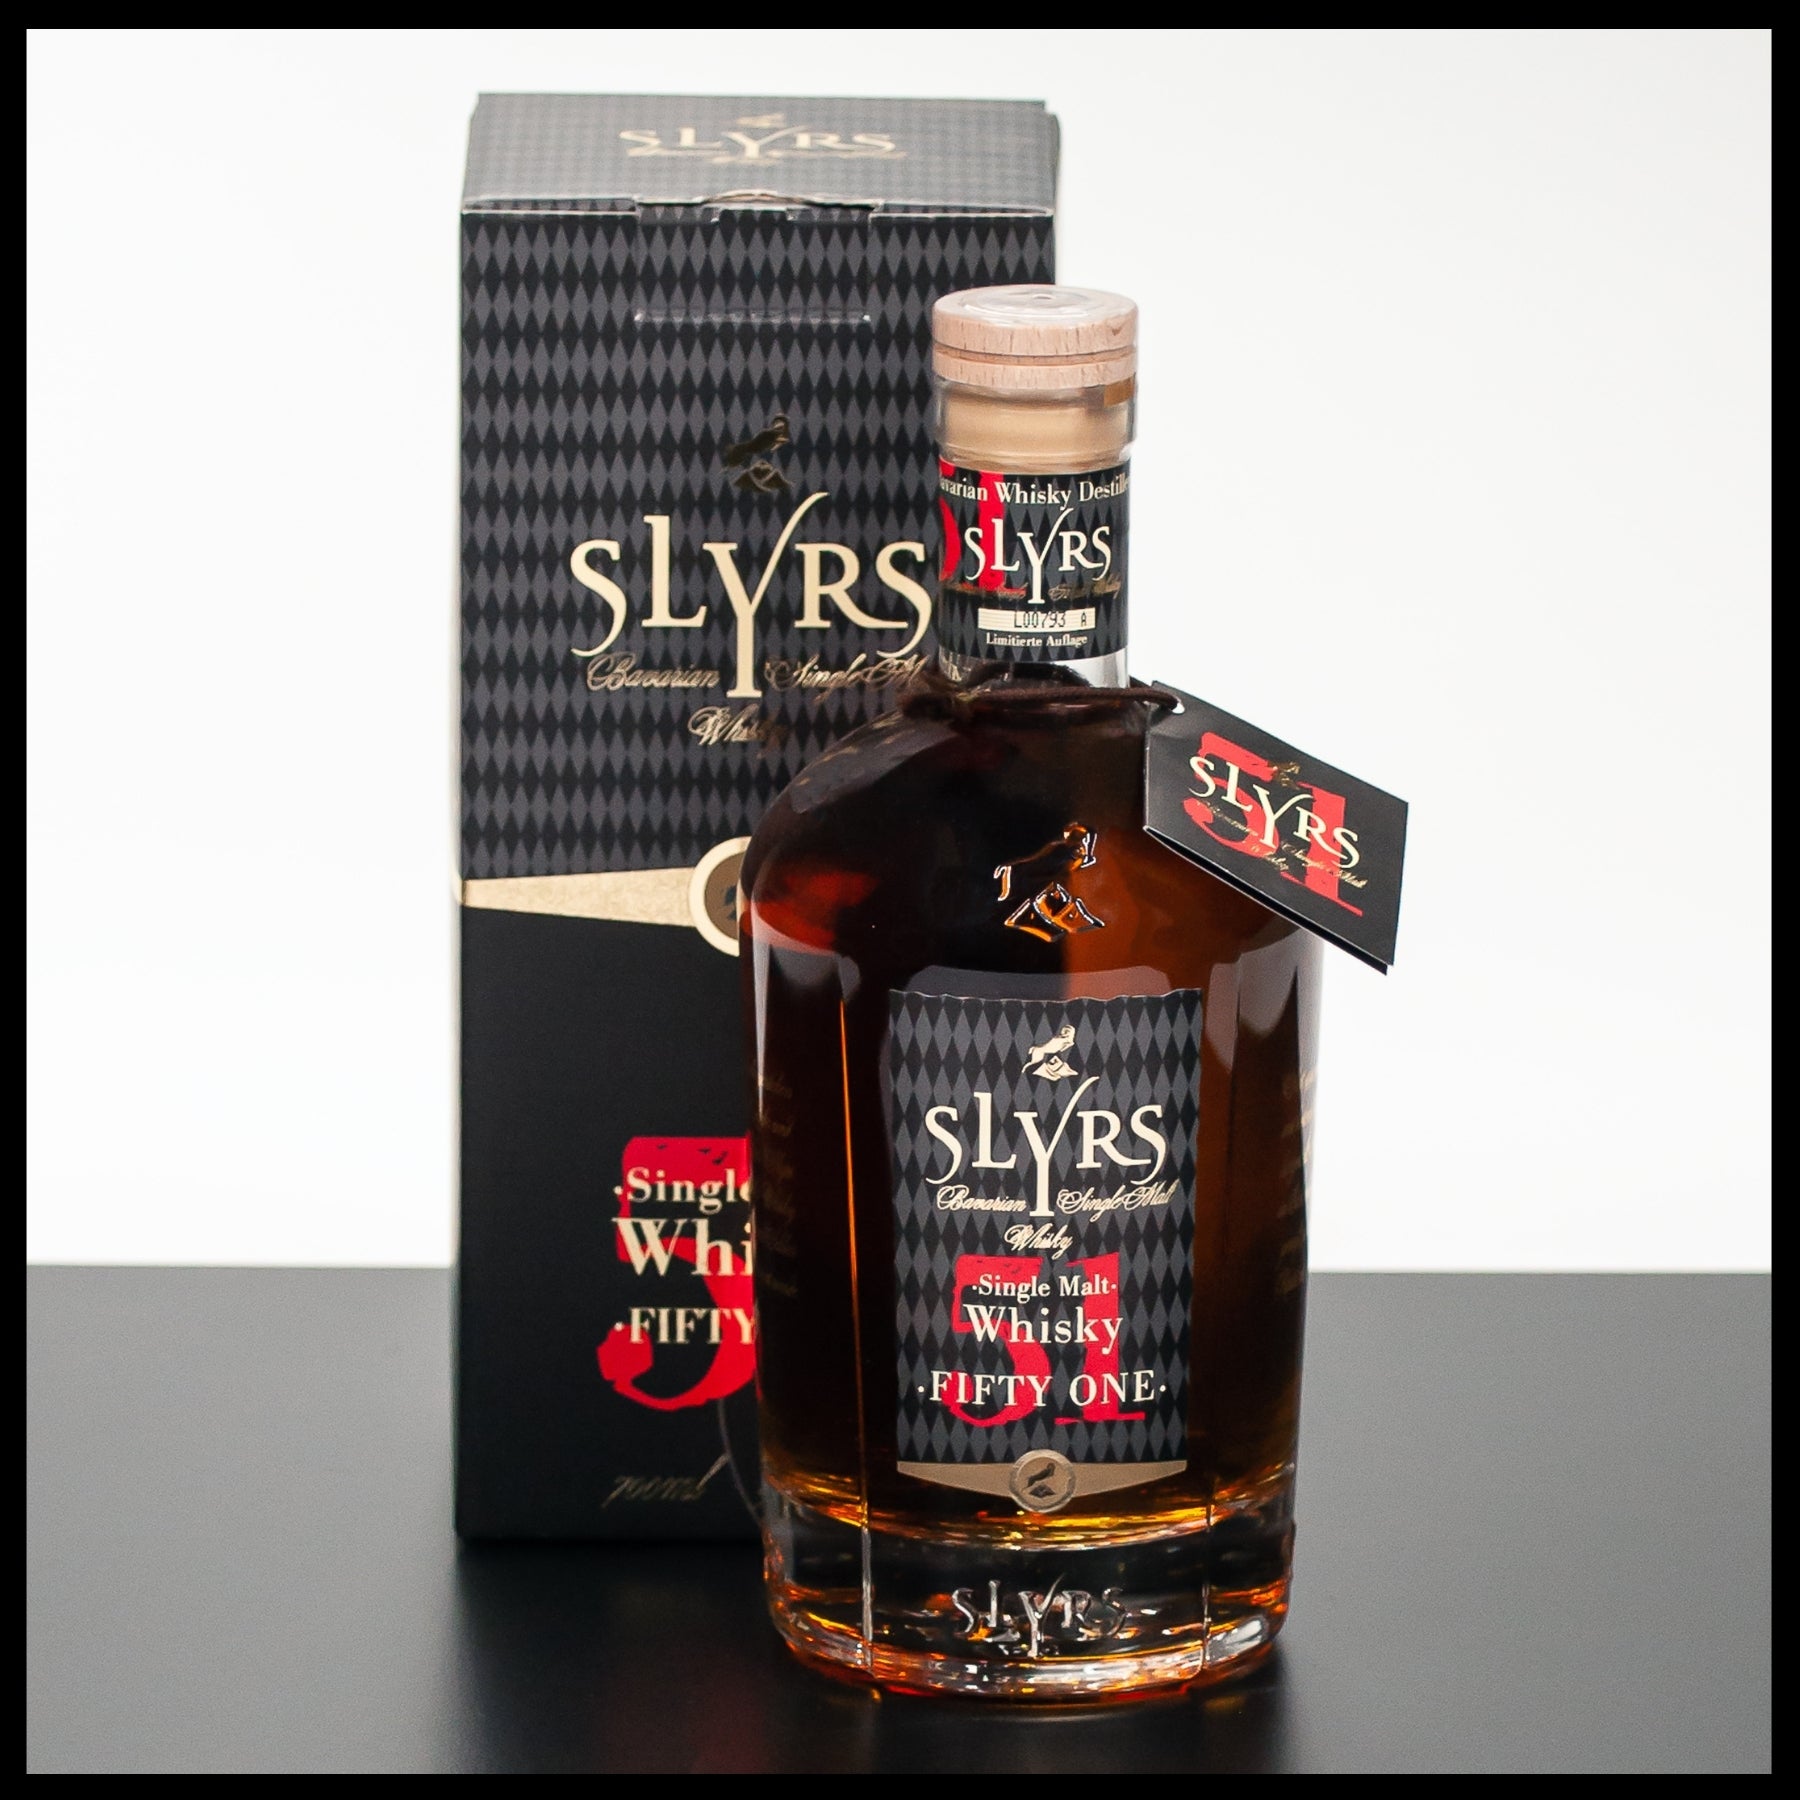 Slyrs Fifty One Single Malt Whisky 0,7L - 51%